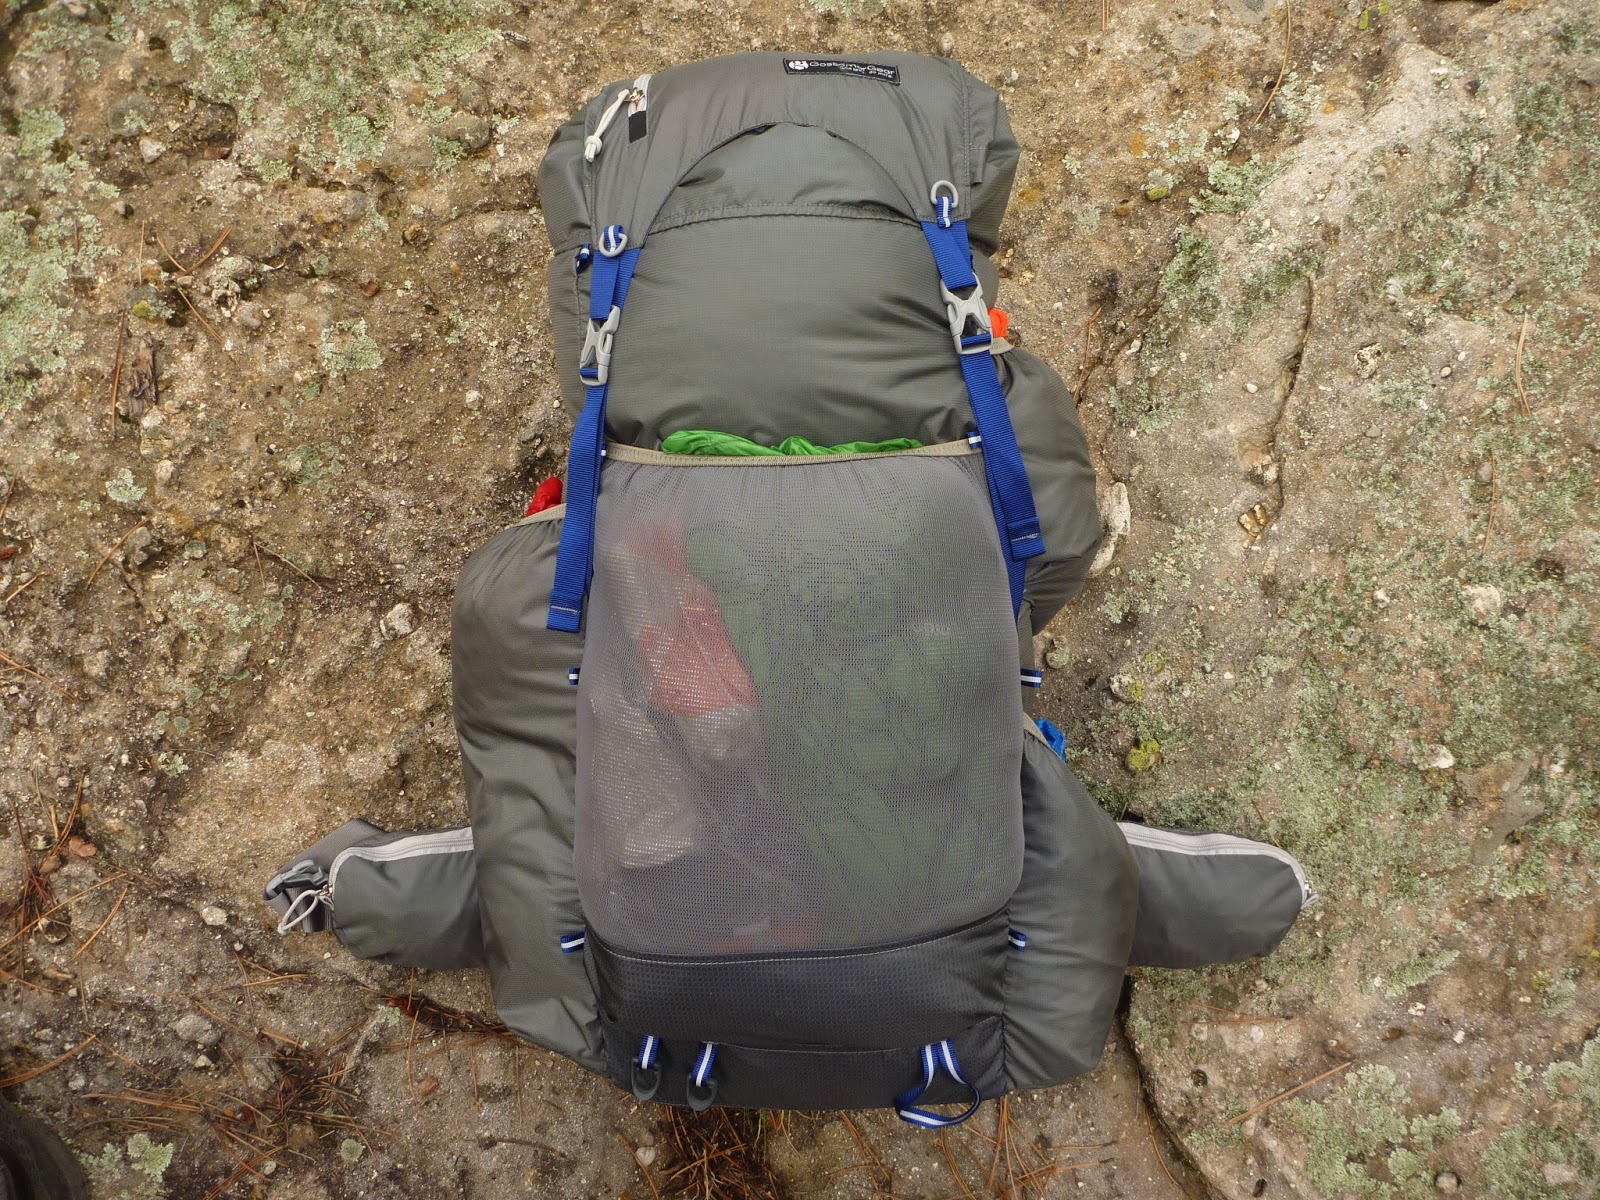 The 2014 Gossamer Gear Mariposa Backpack. Photo Credit: Southwest Ultralight